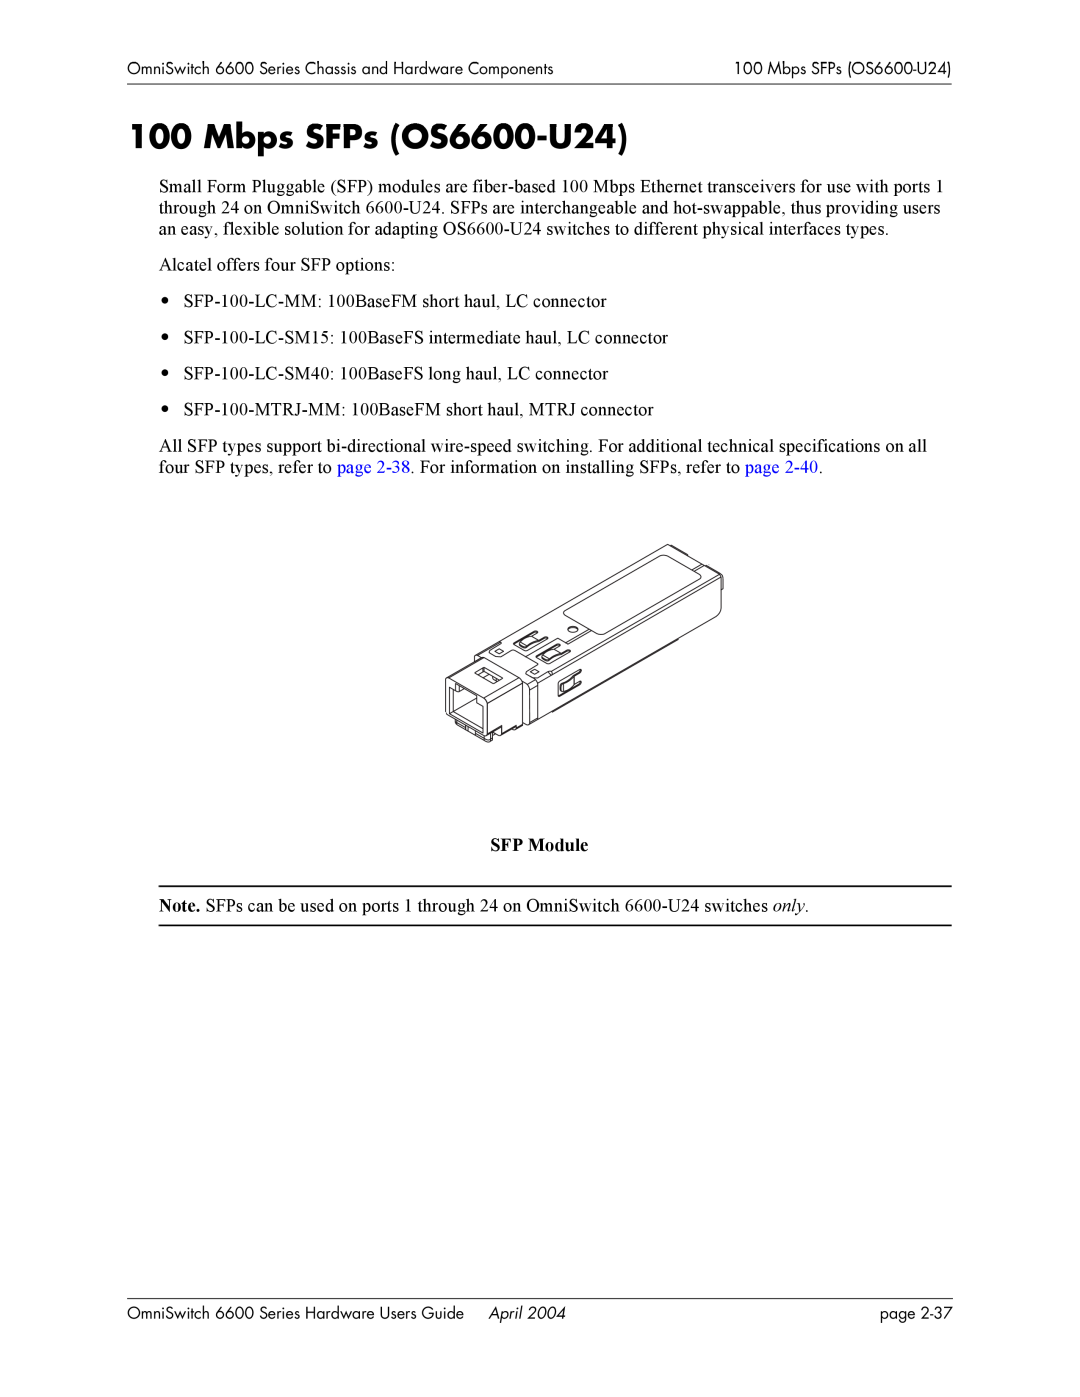 Alcatel-Lucent 6648, 6624, 6600 Series manual Mbps SFPs OS6600-U24, SFP Module 